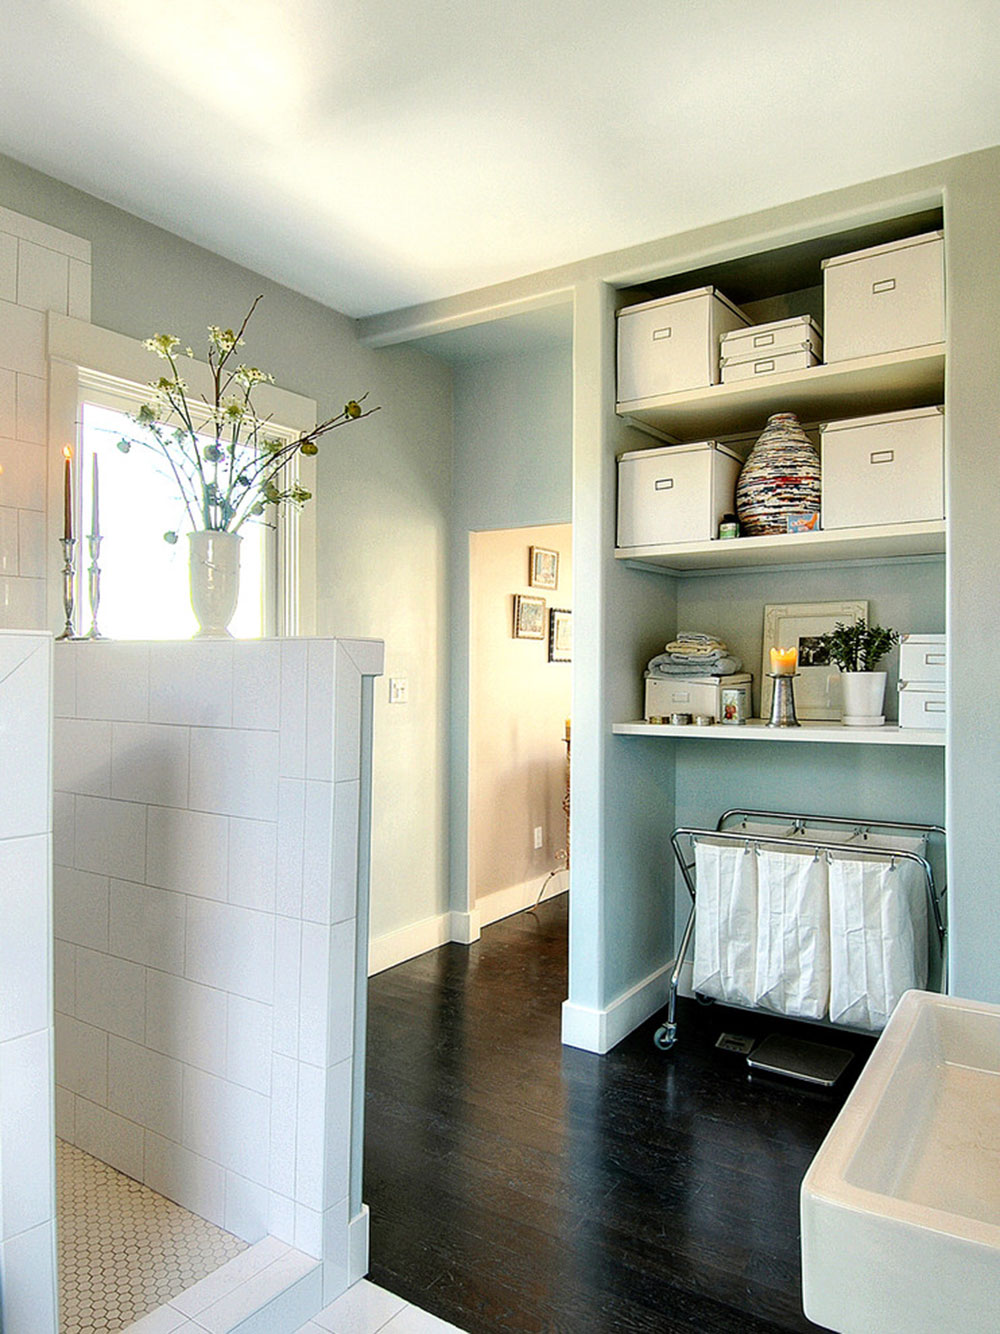 Leschi-Residence-by-Zinc-Art-Interiors Small bathroom shelf ideas to optimize your bathroom space